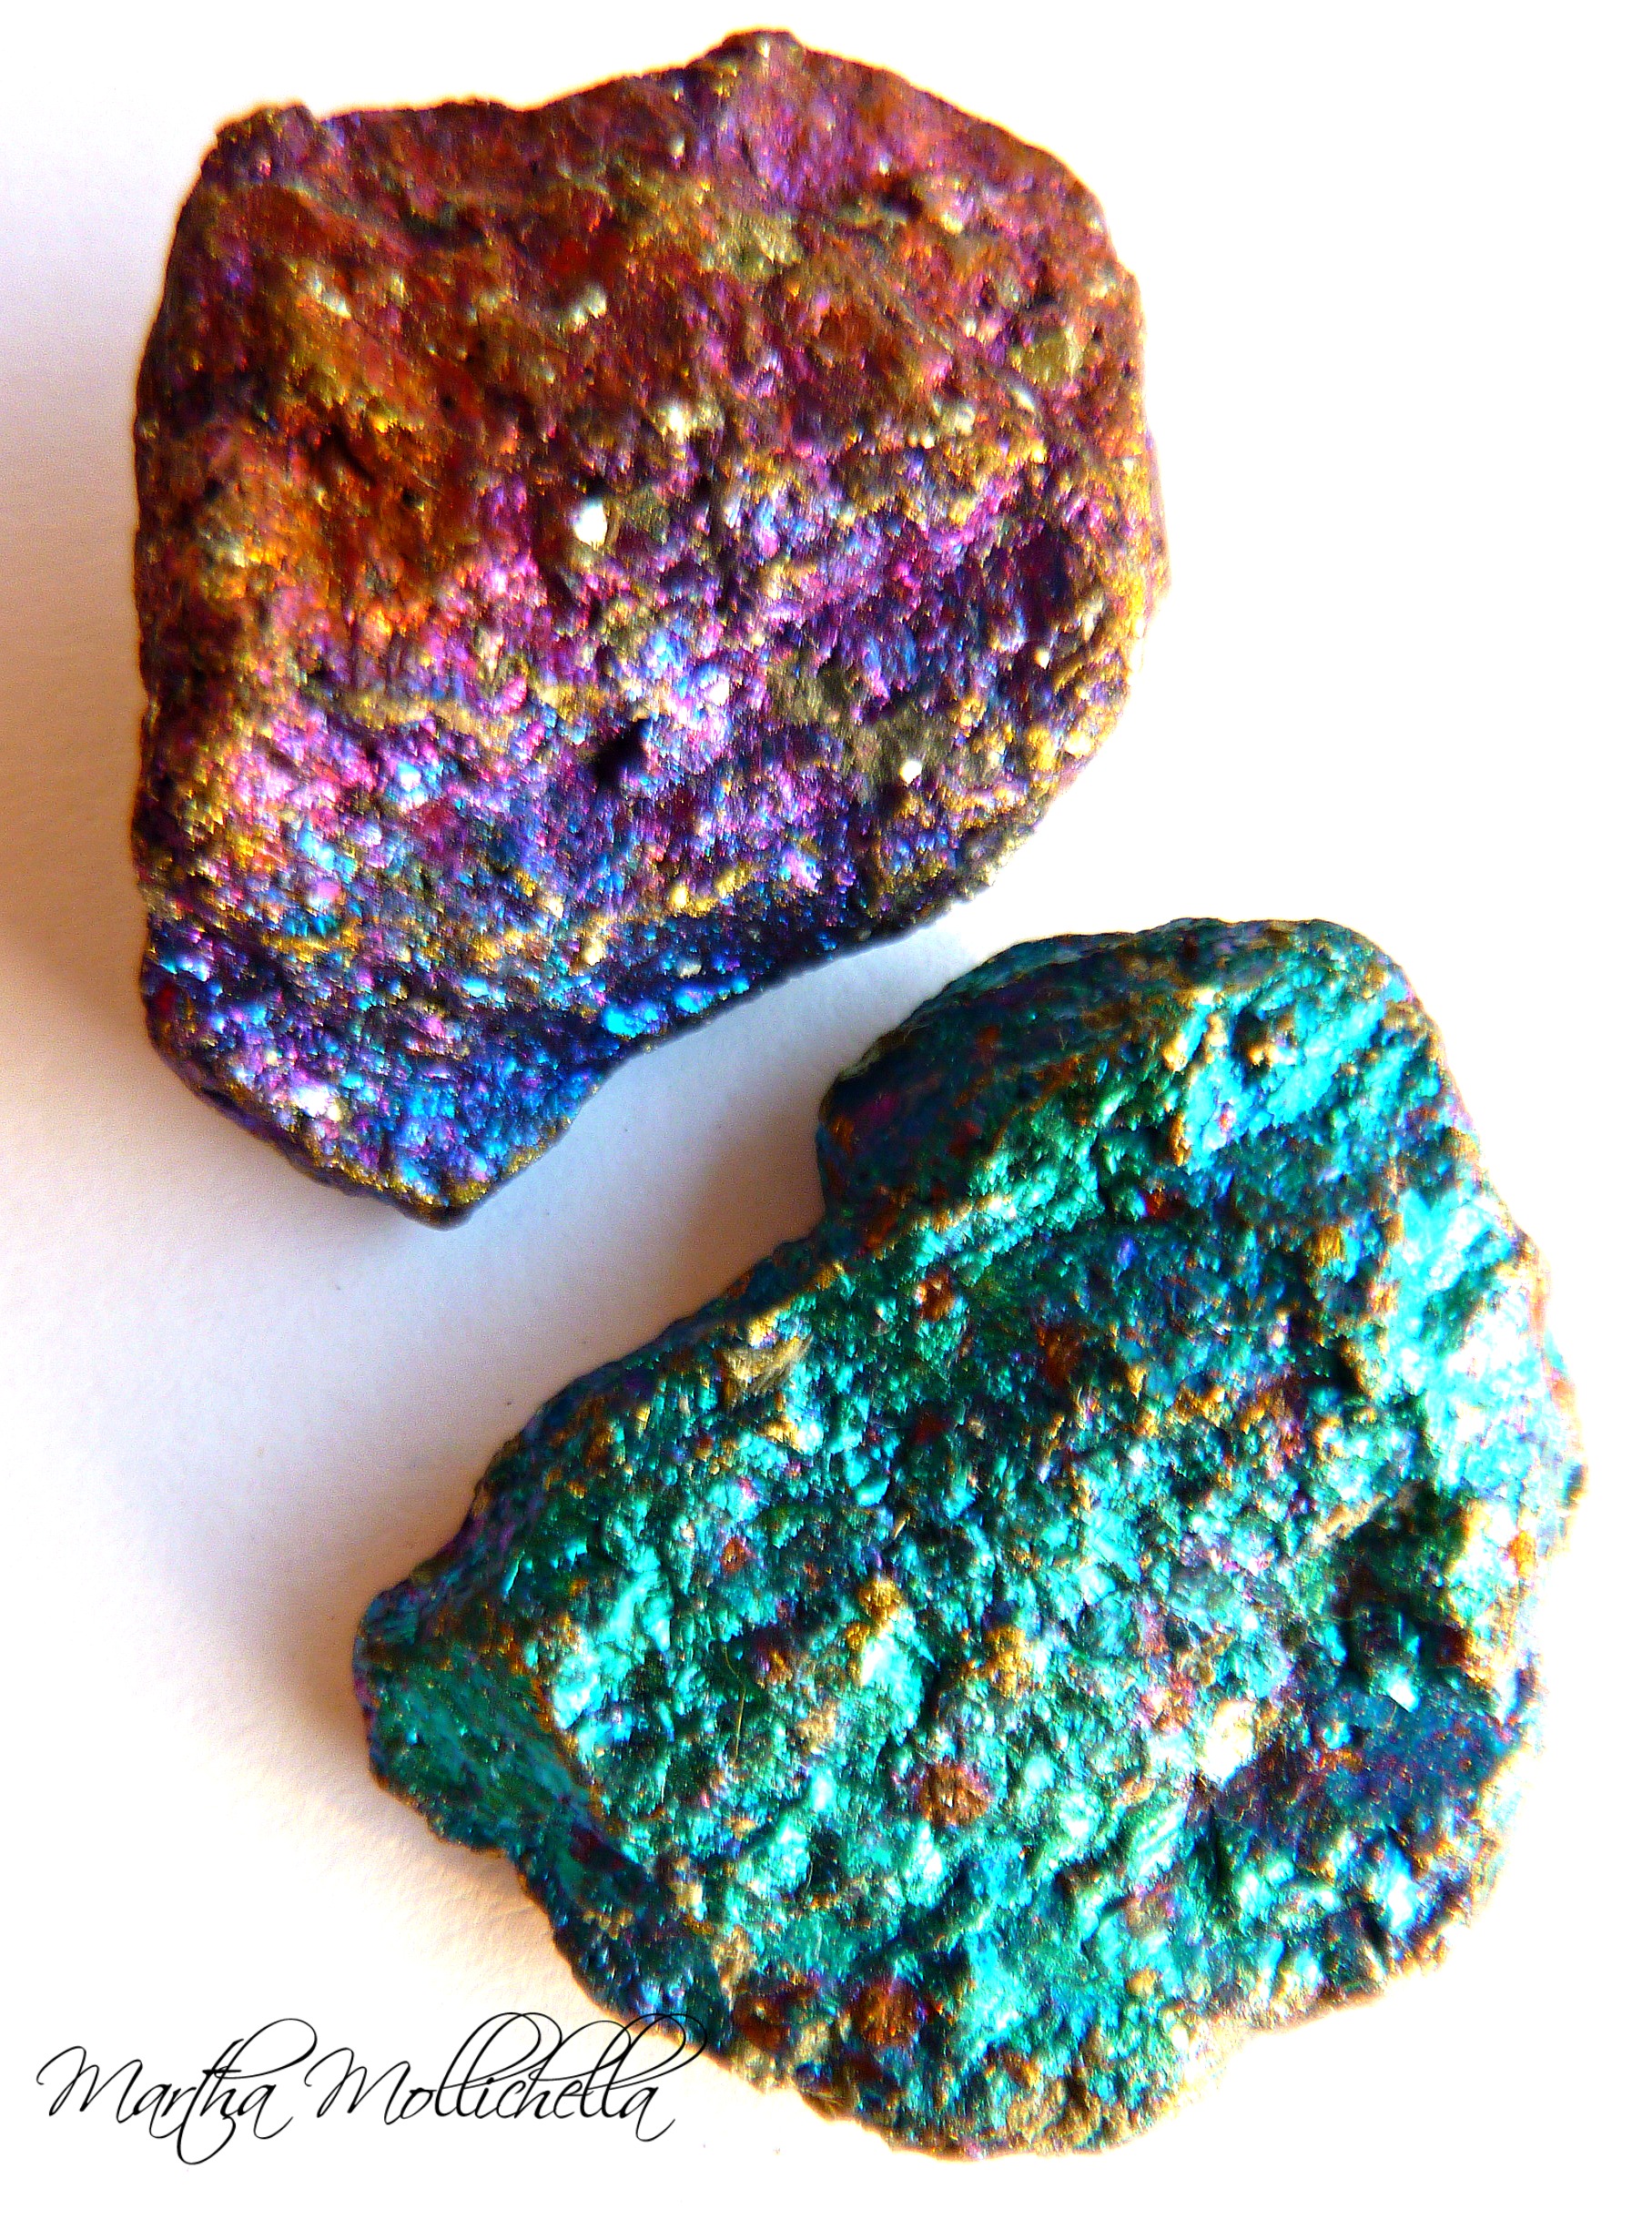 calcopirite, chalcopyrite, yellow copper ore, yellow pyrites